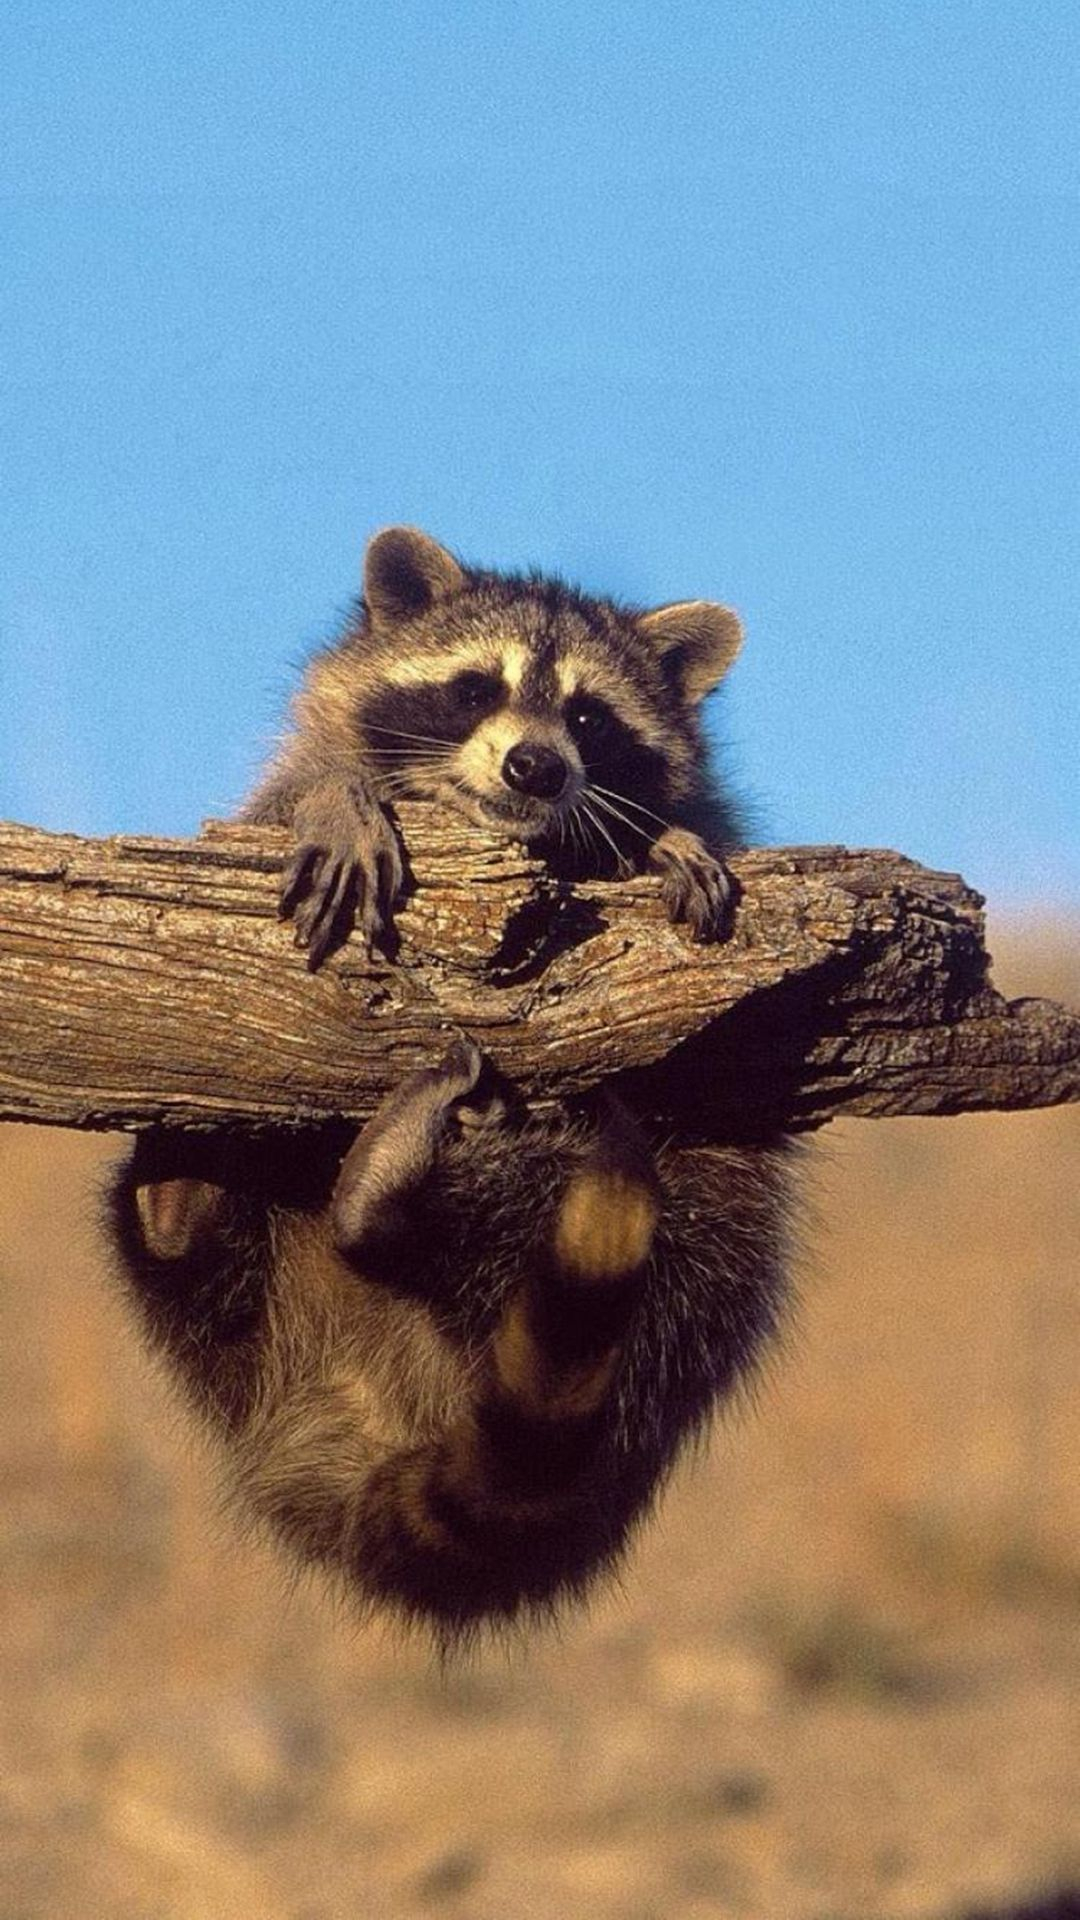 1080x1920 Cute Desert Leopard Cat Animal iPhone 6 wallpaper | Baby raccoon, Cute raccoon, Funny animals